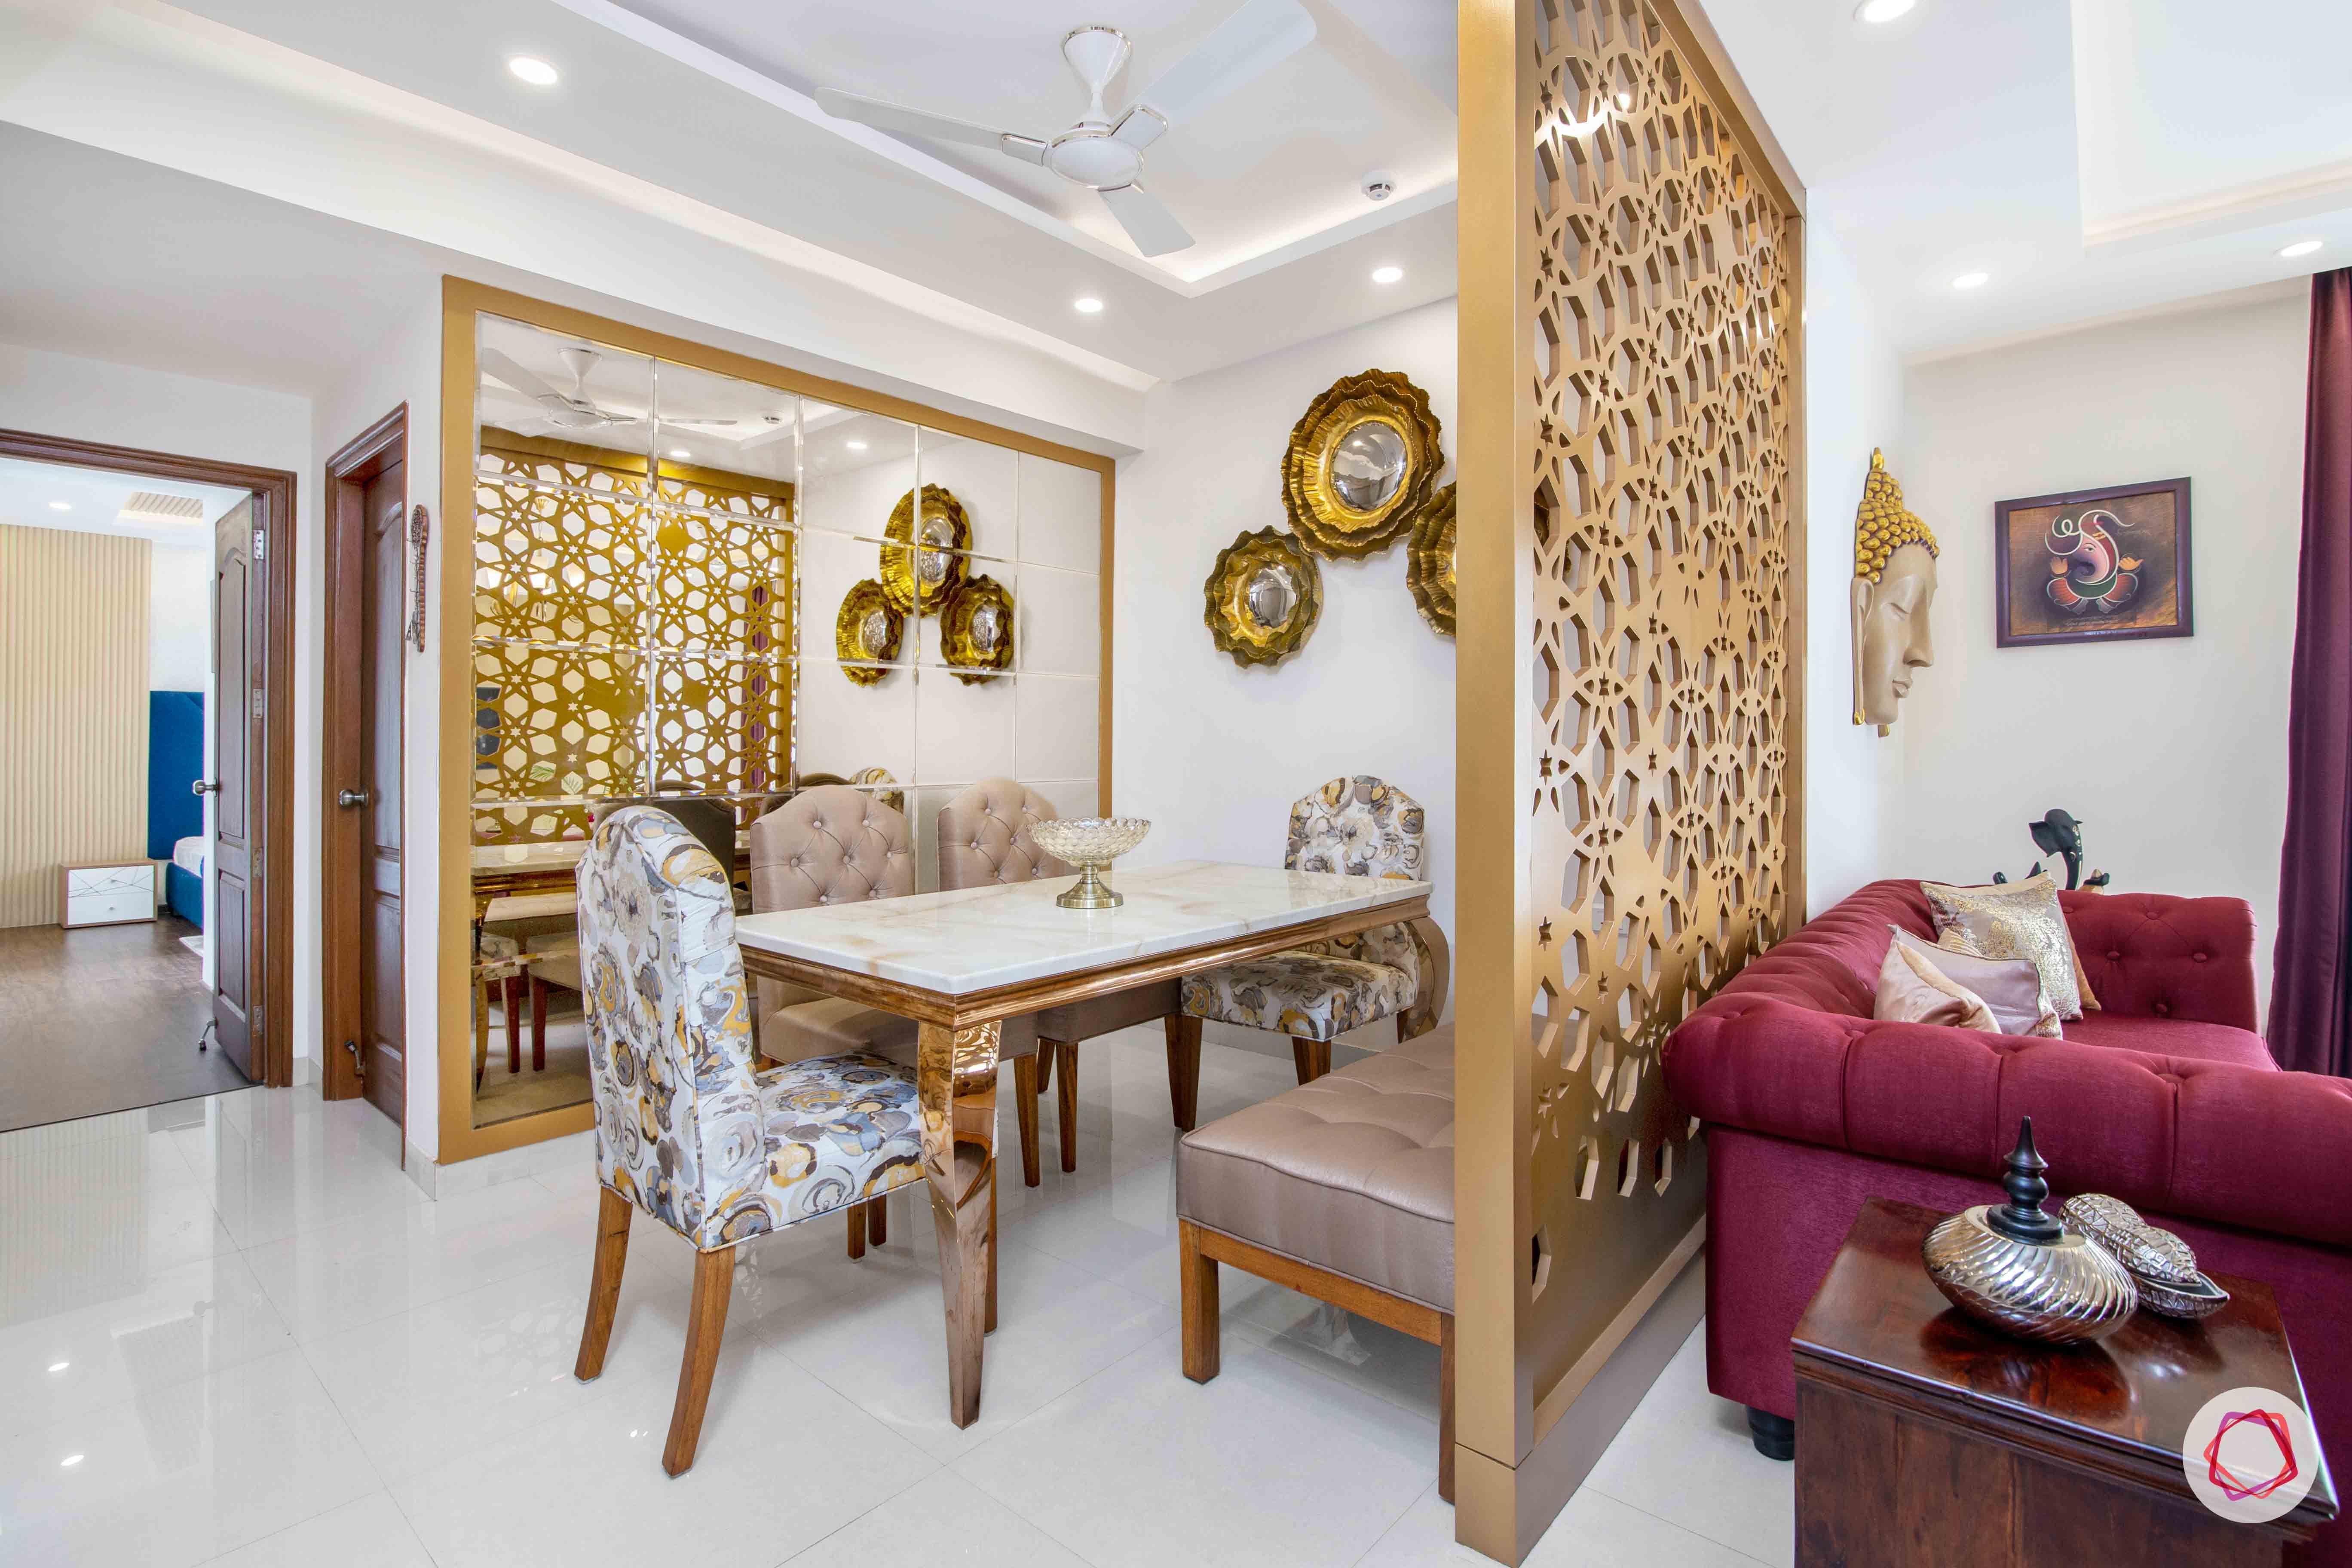 3 bedroom flat design-jaali designs-dining room designs-mirrored wall panel-marble tabletop
